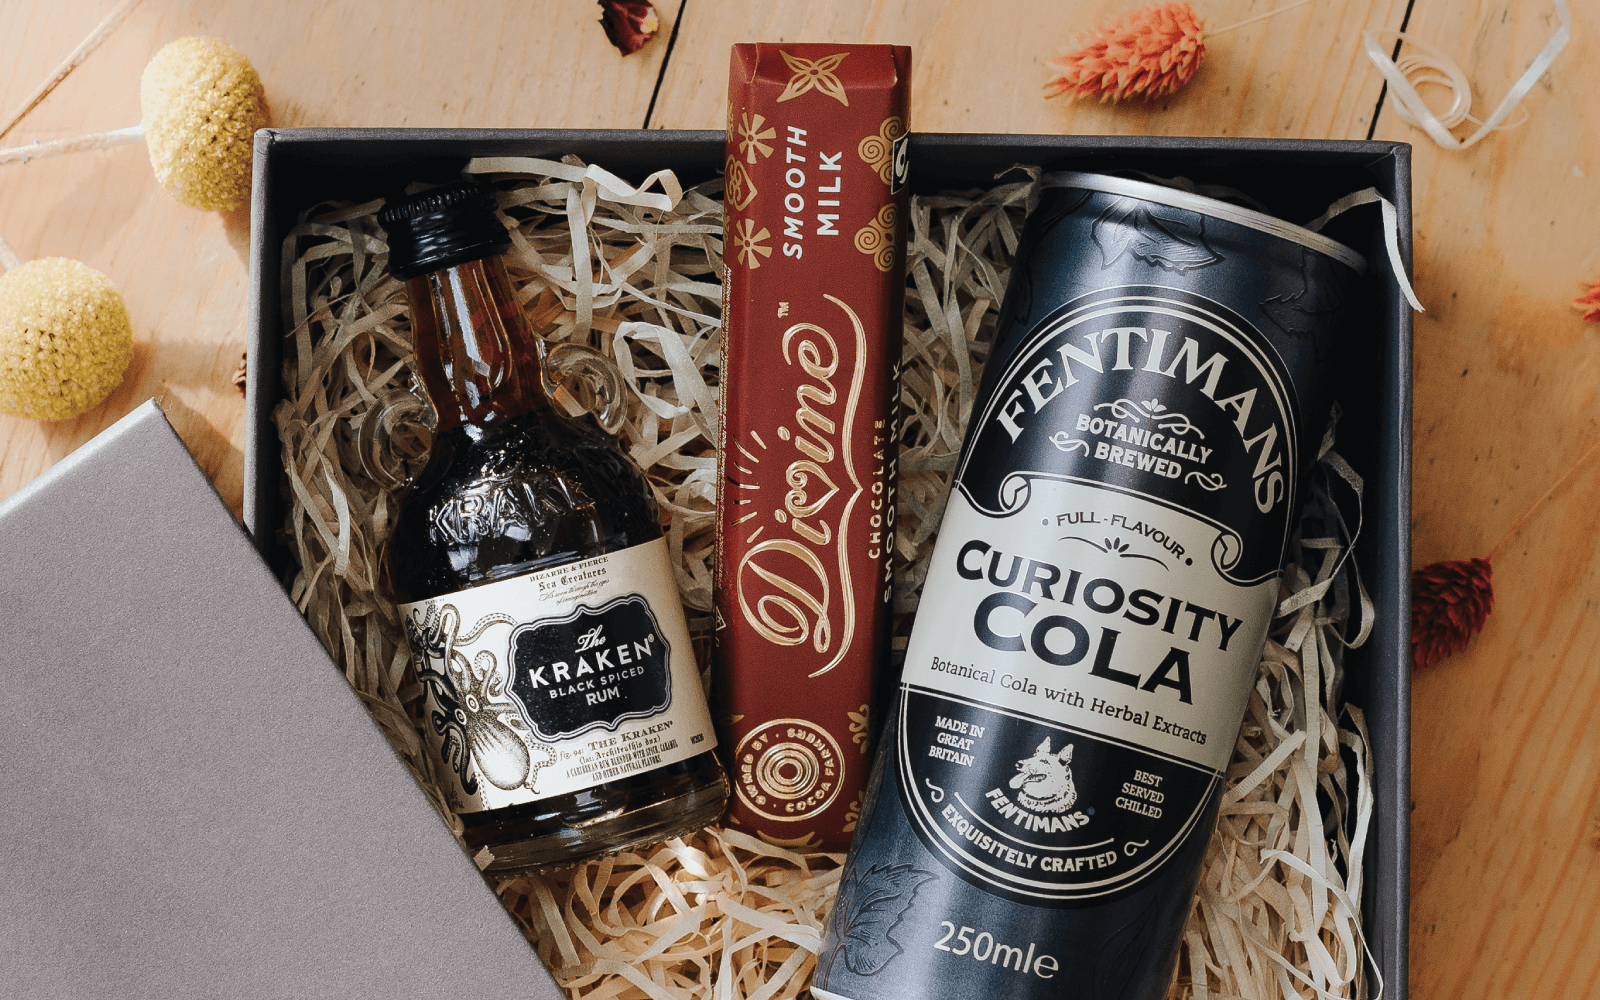 Kraken Rum Gift Set with Fentimans Curiosity cola